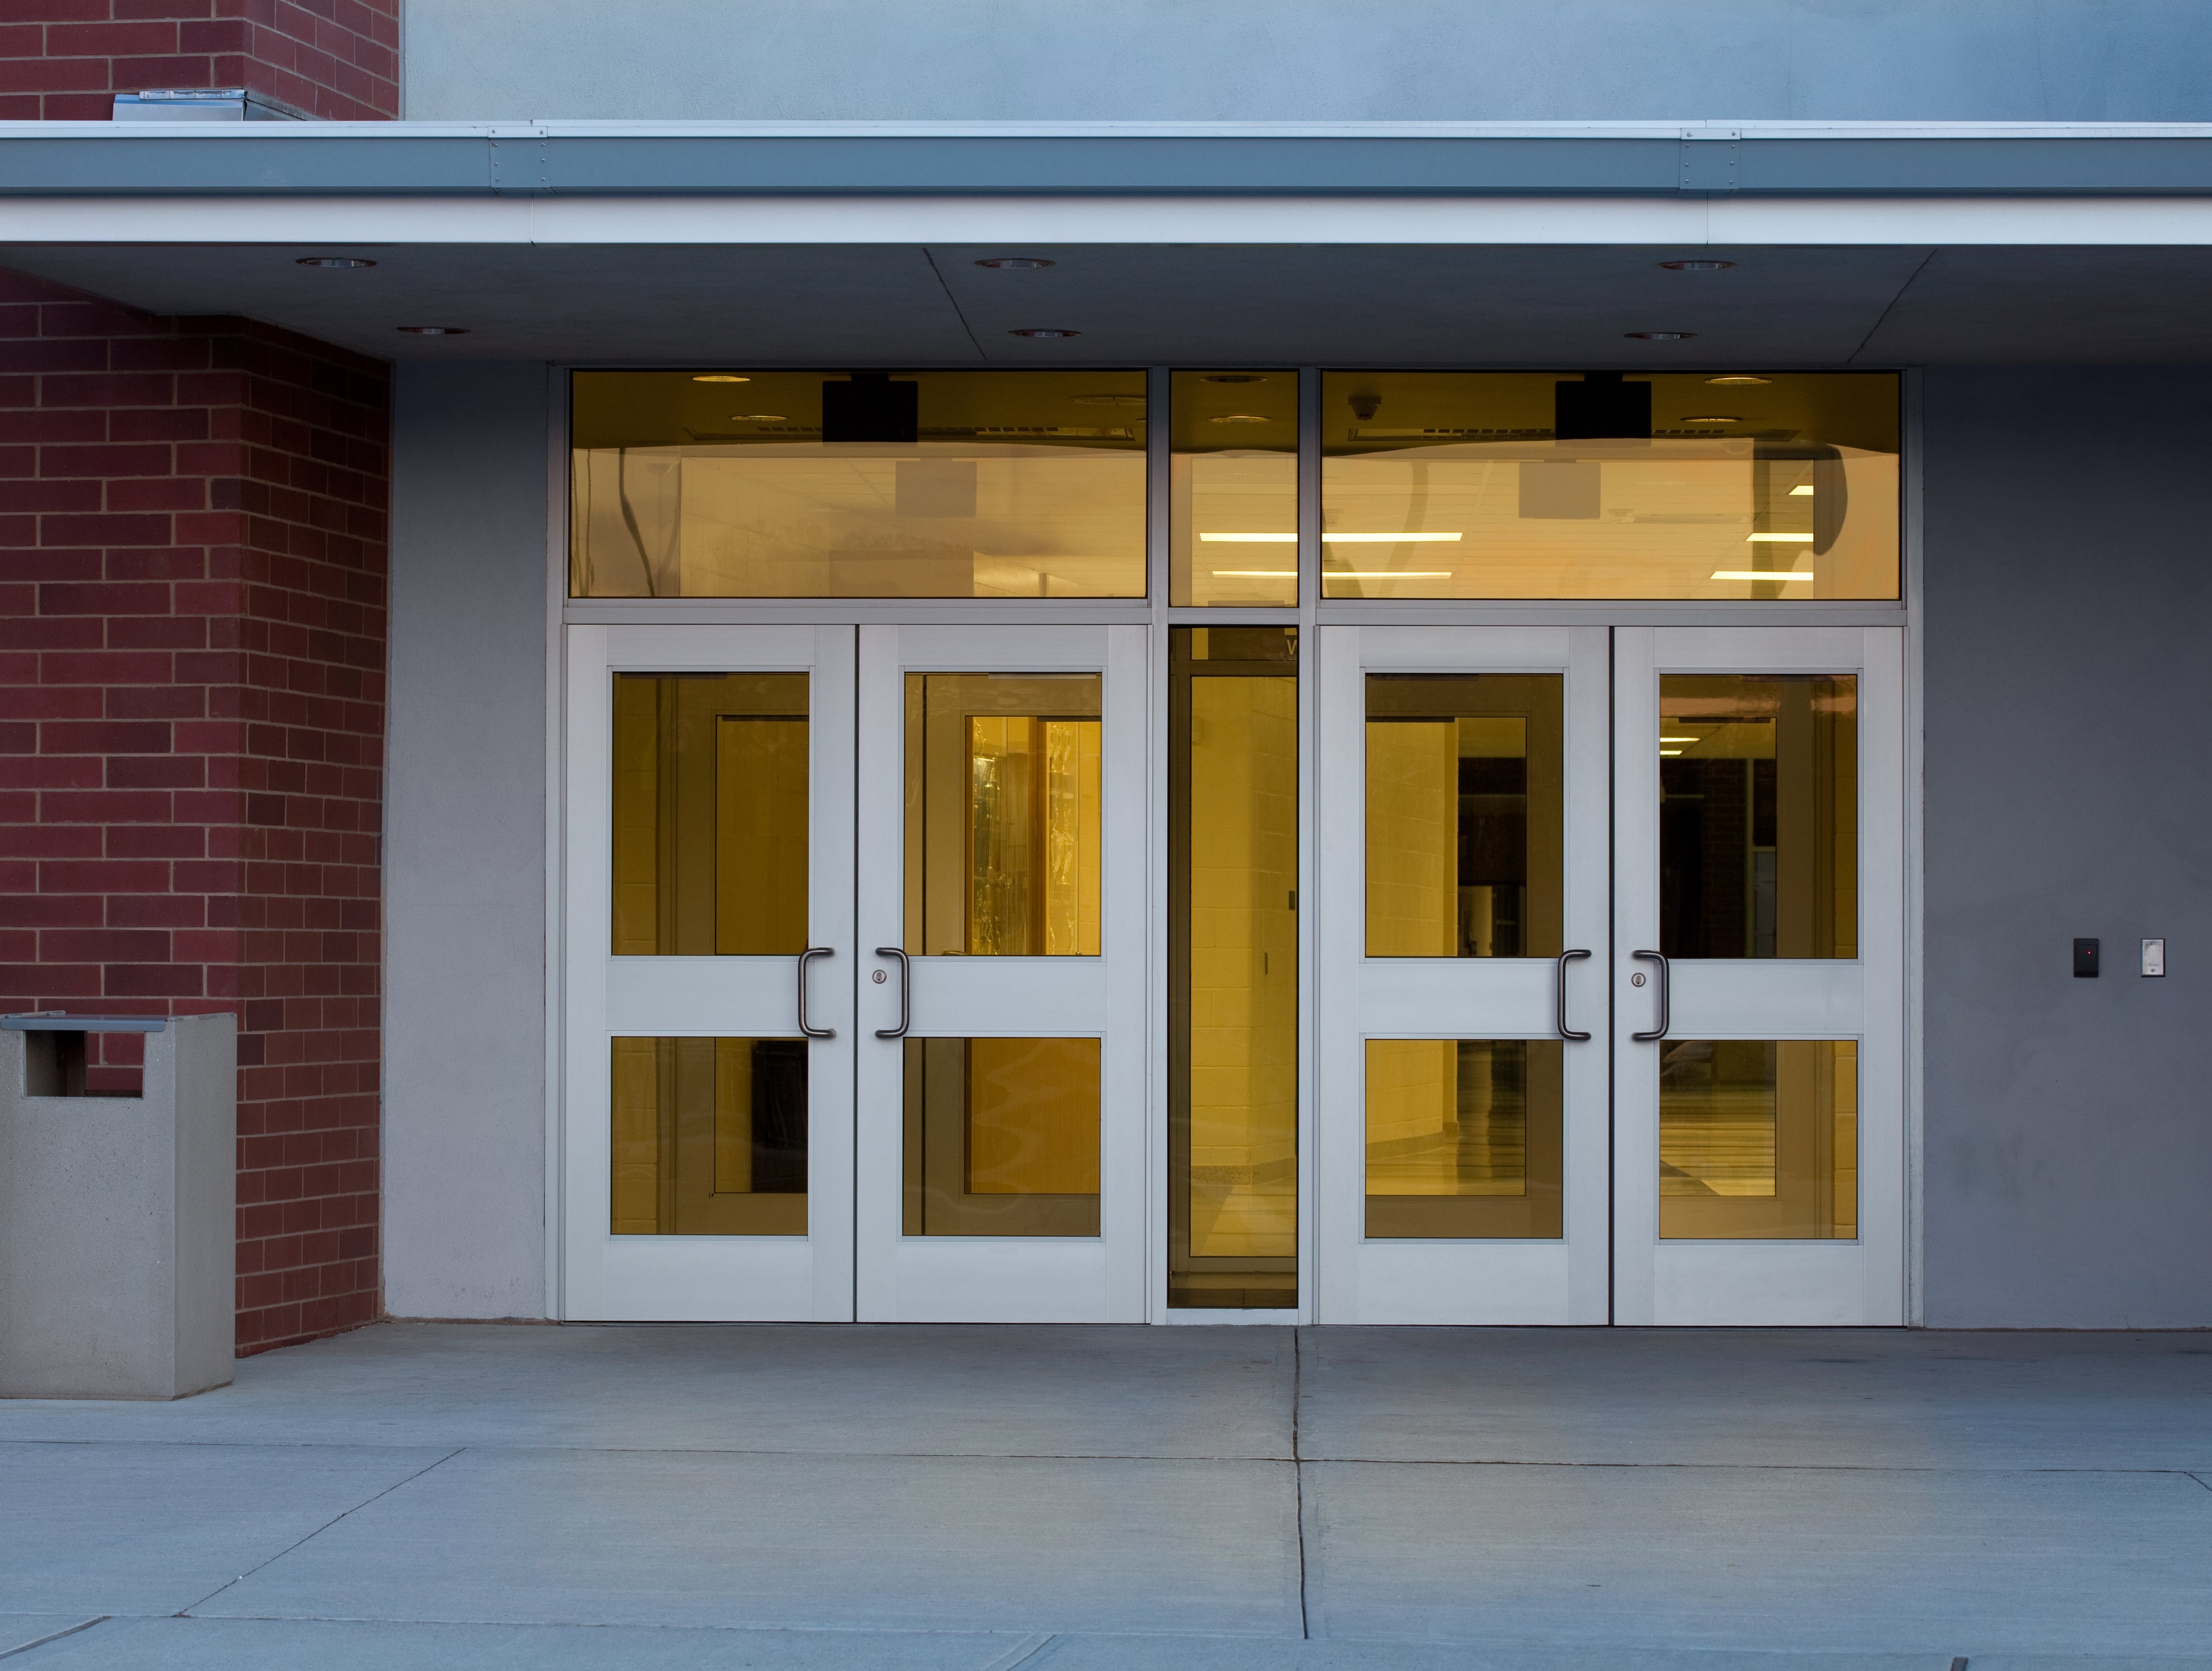 school doors at entrance of building